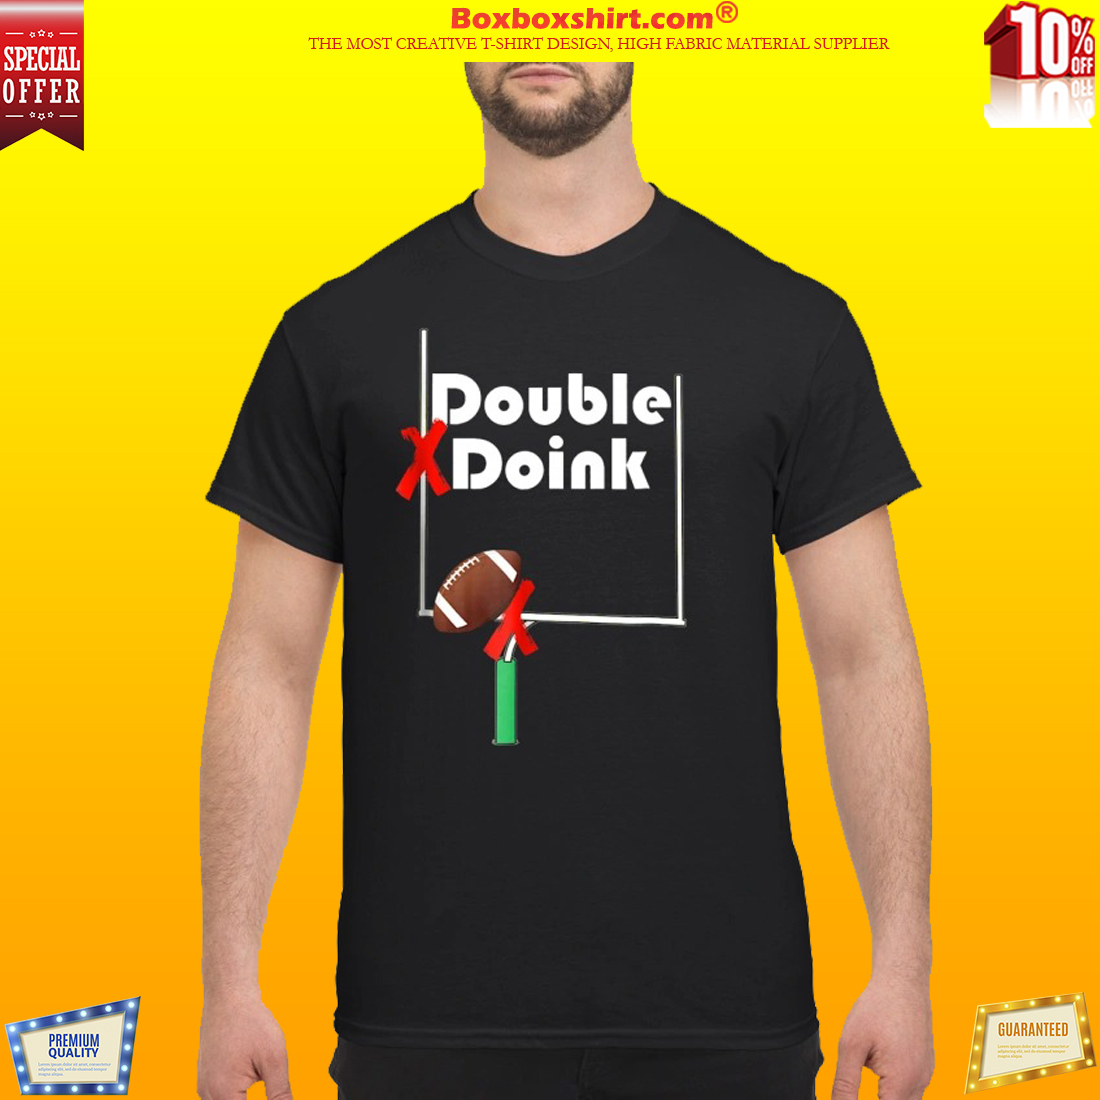 Double Doink Football shirt